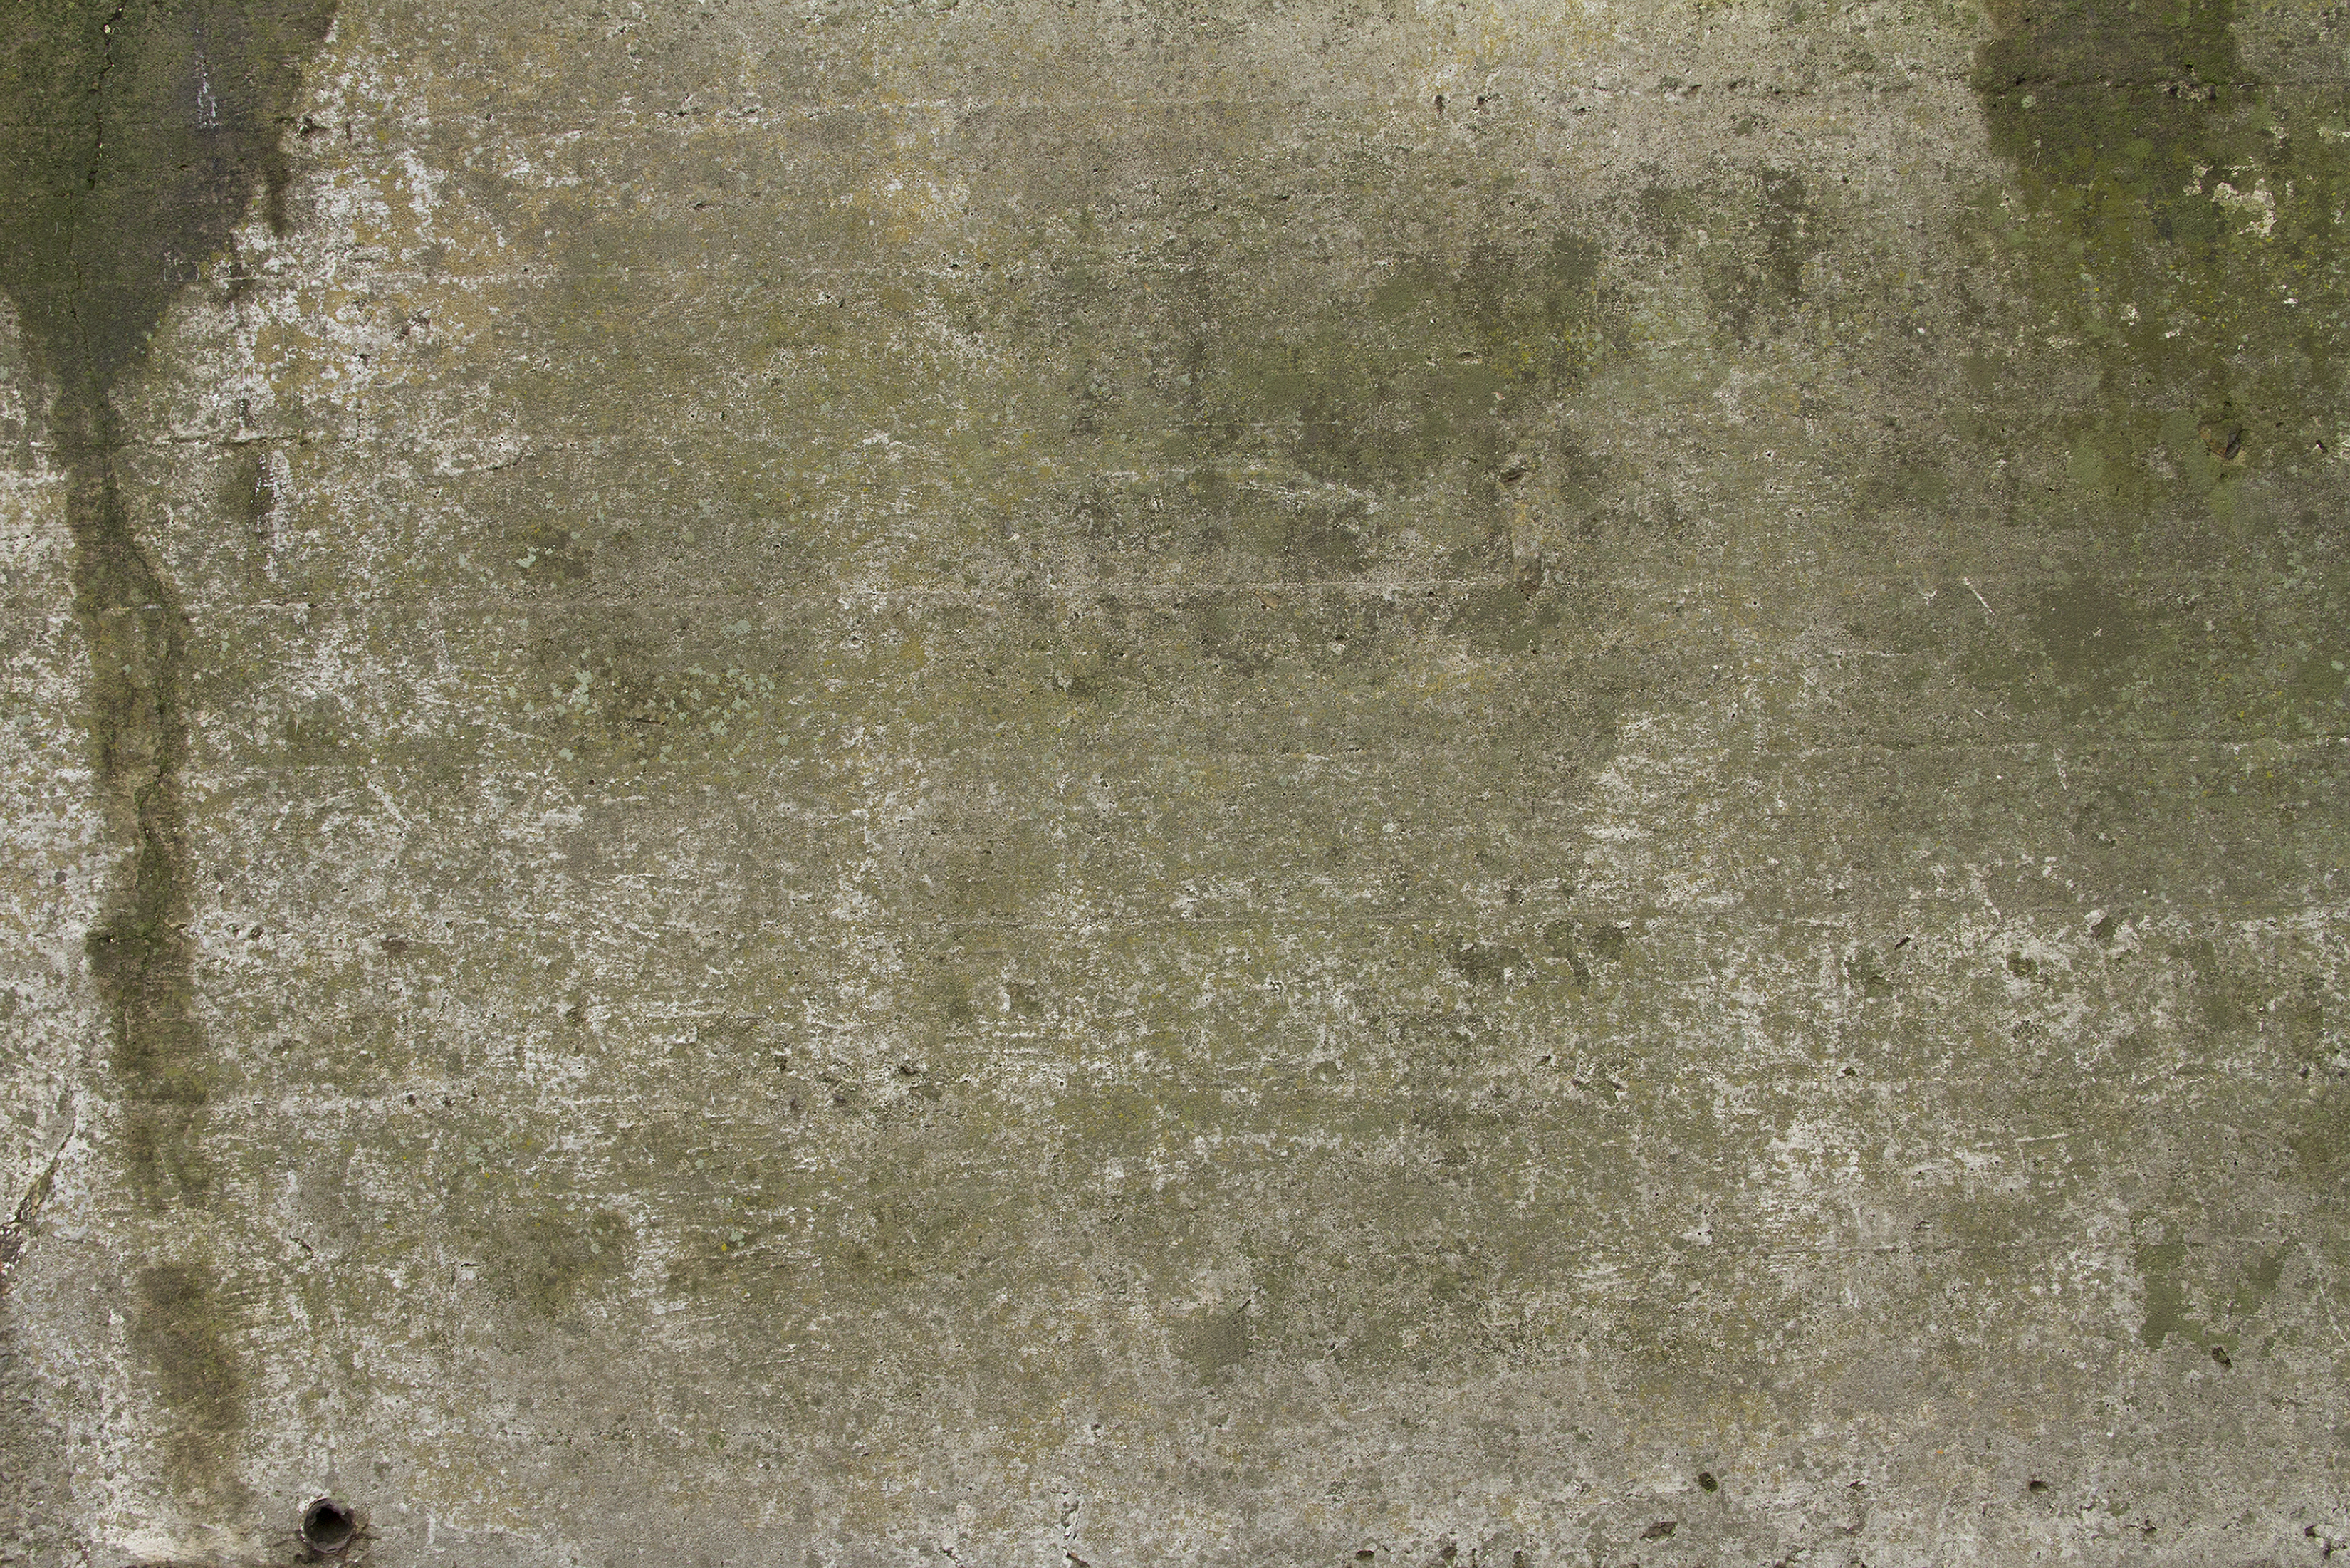 Grunge concrete photo